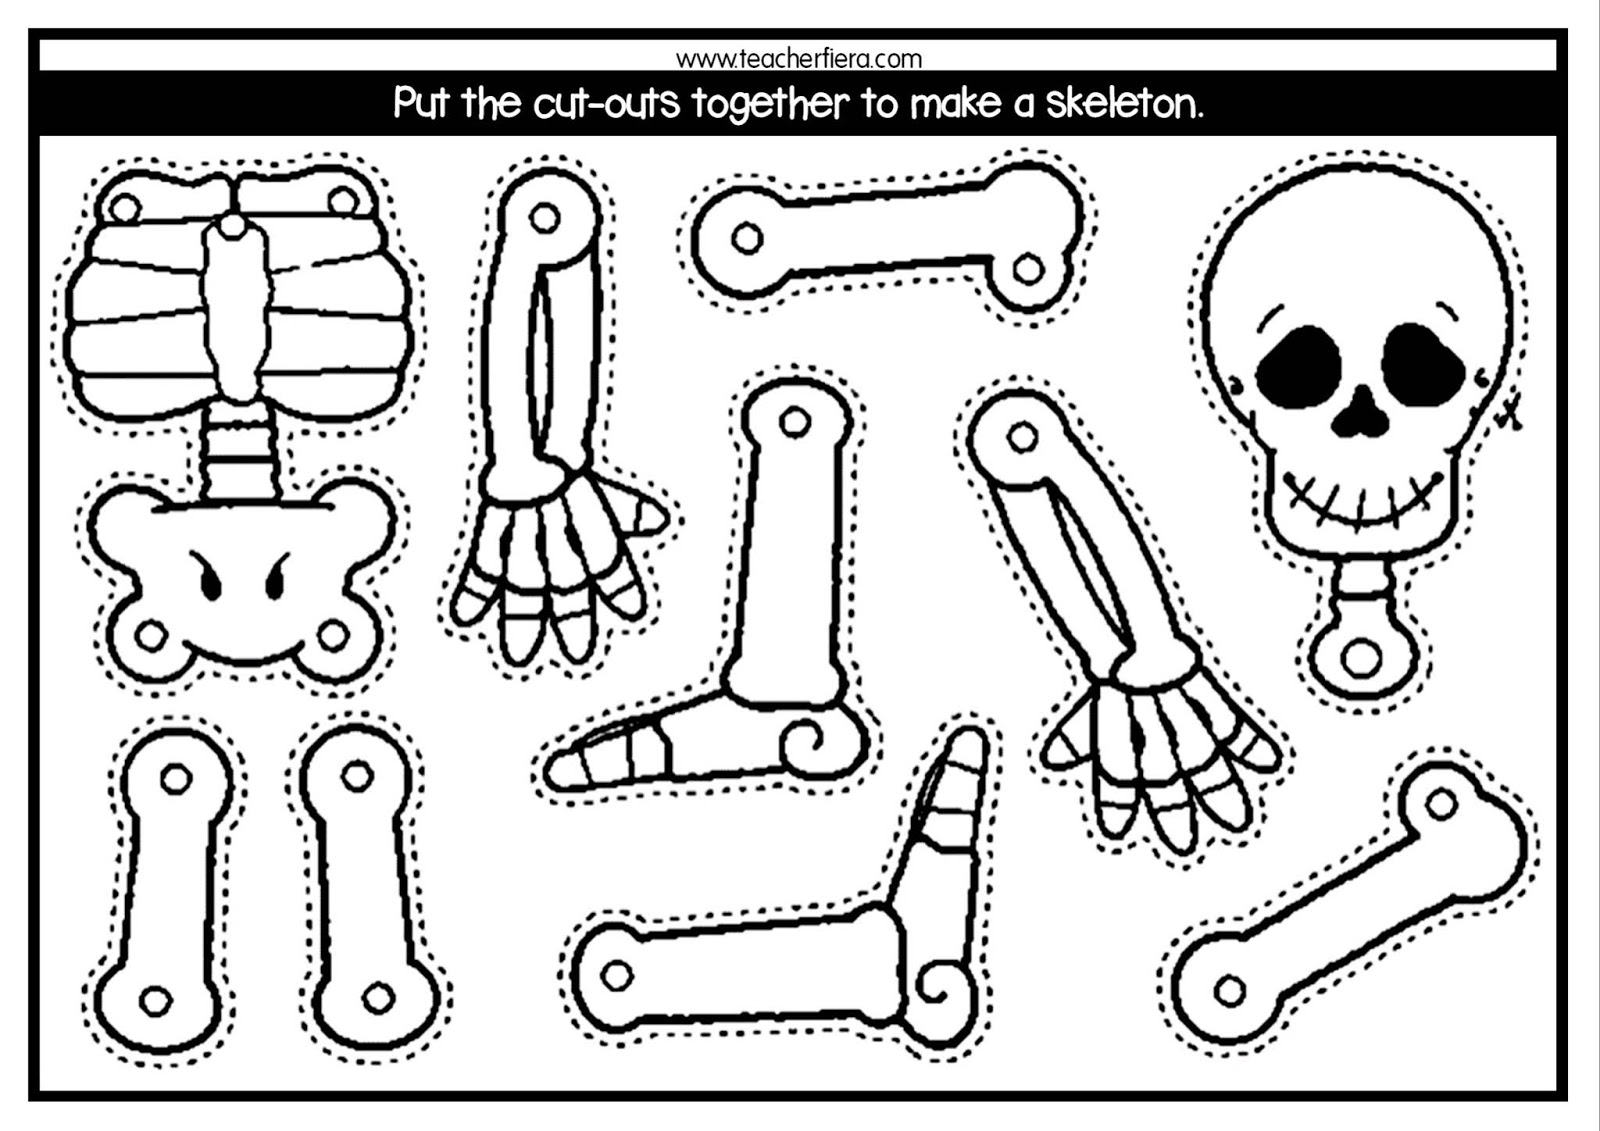 teacherfiera-year-2-unit-8-assembling-the-skeleton-cut-outs